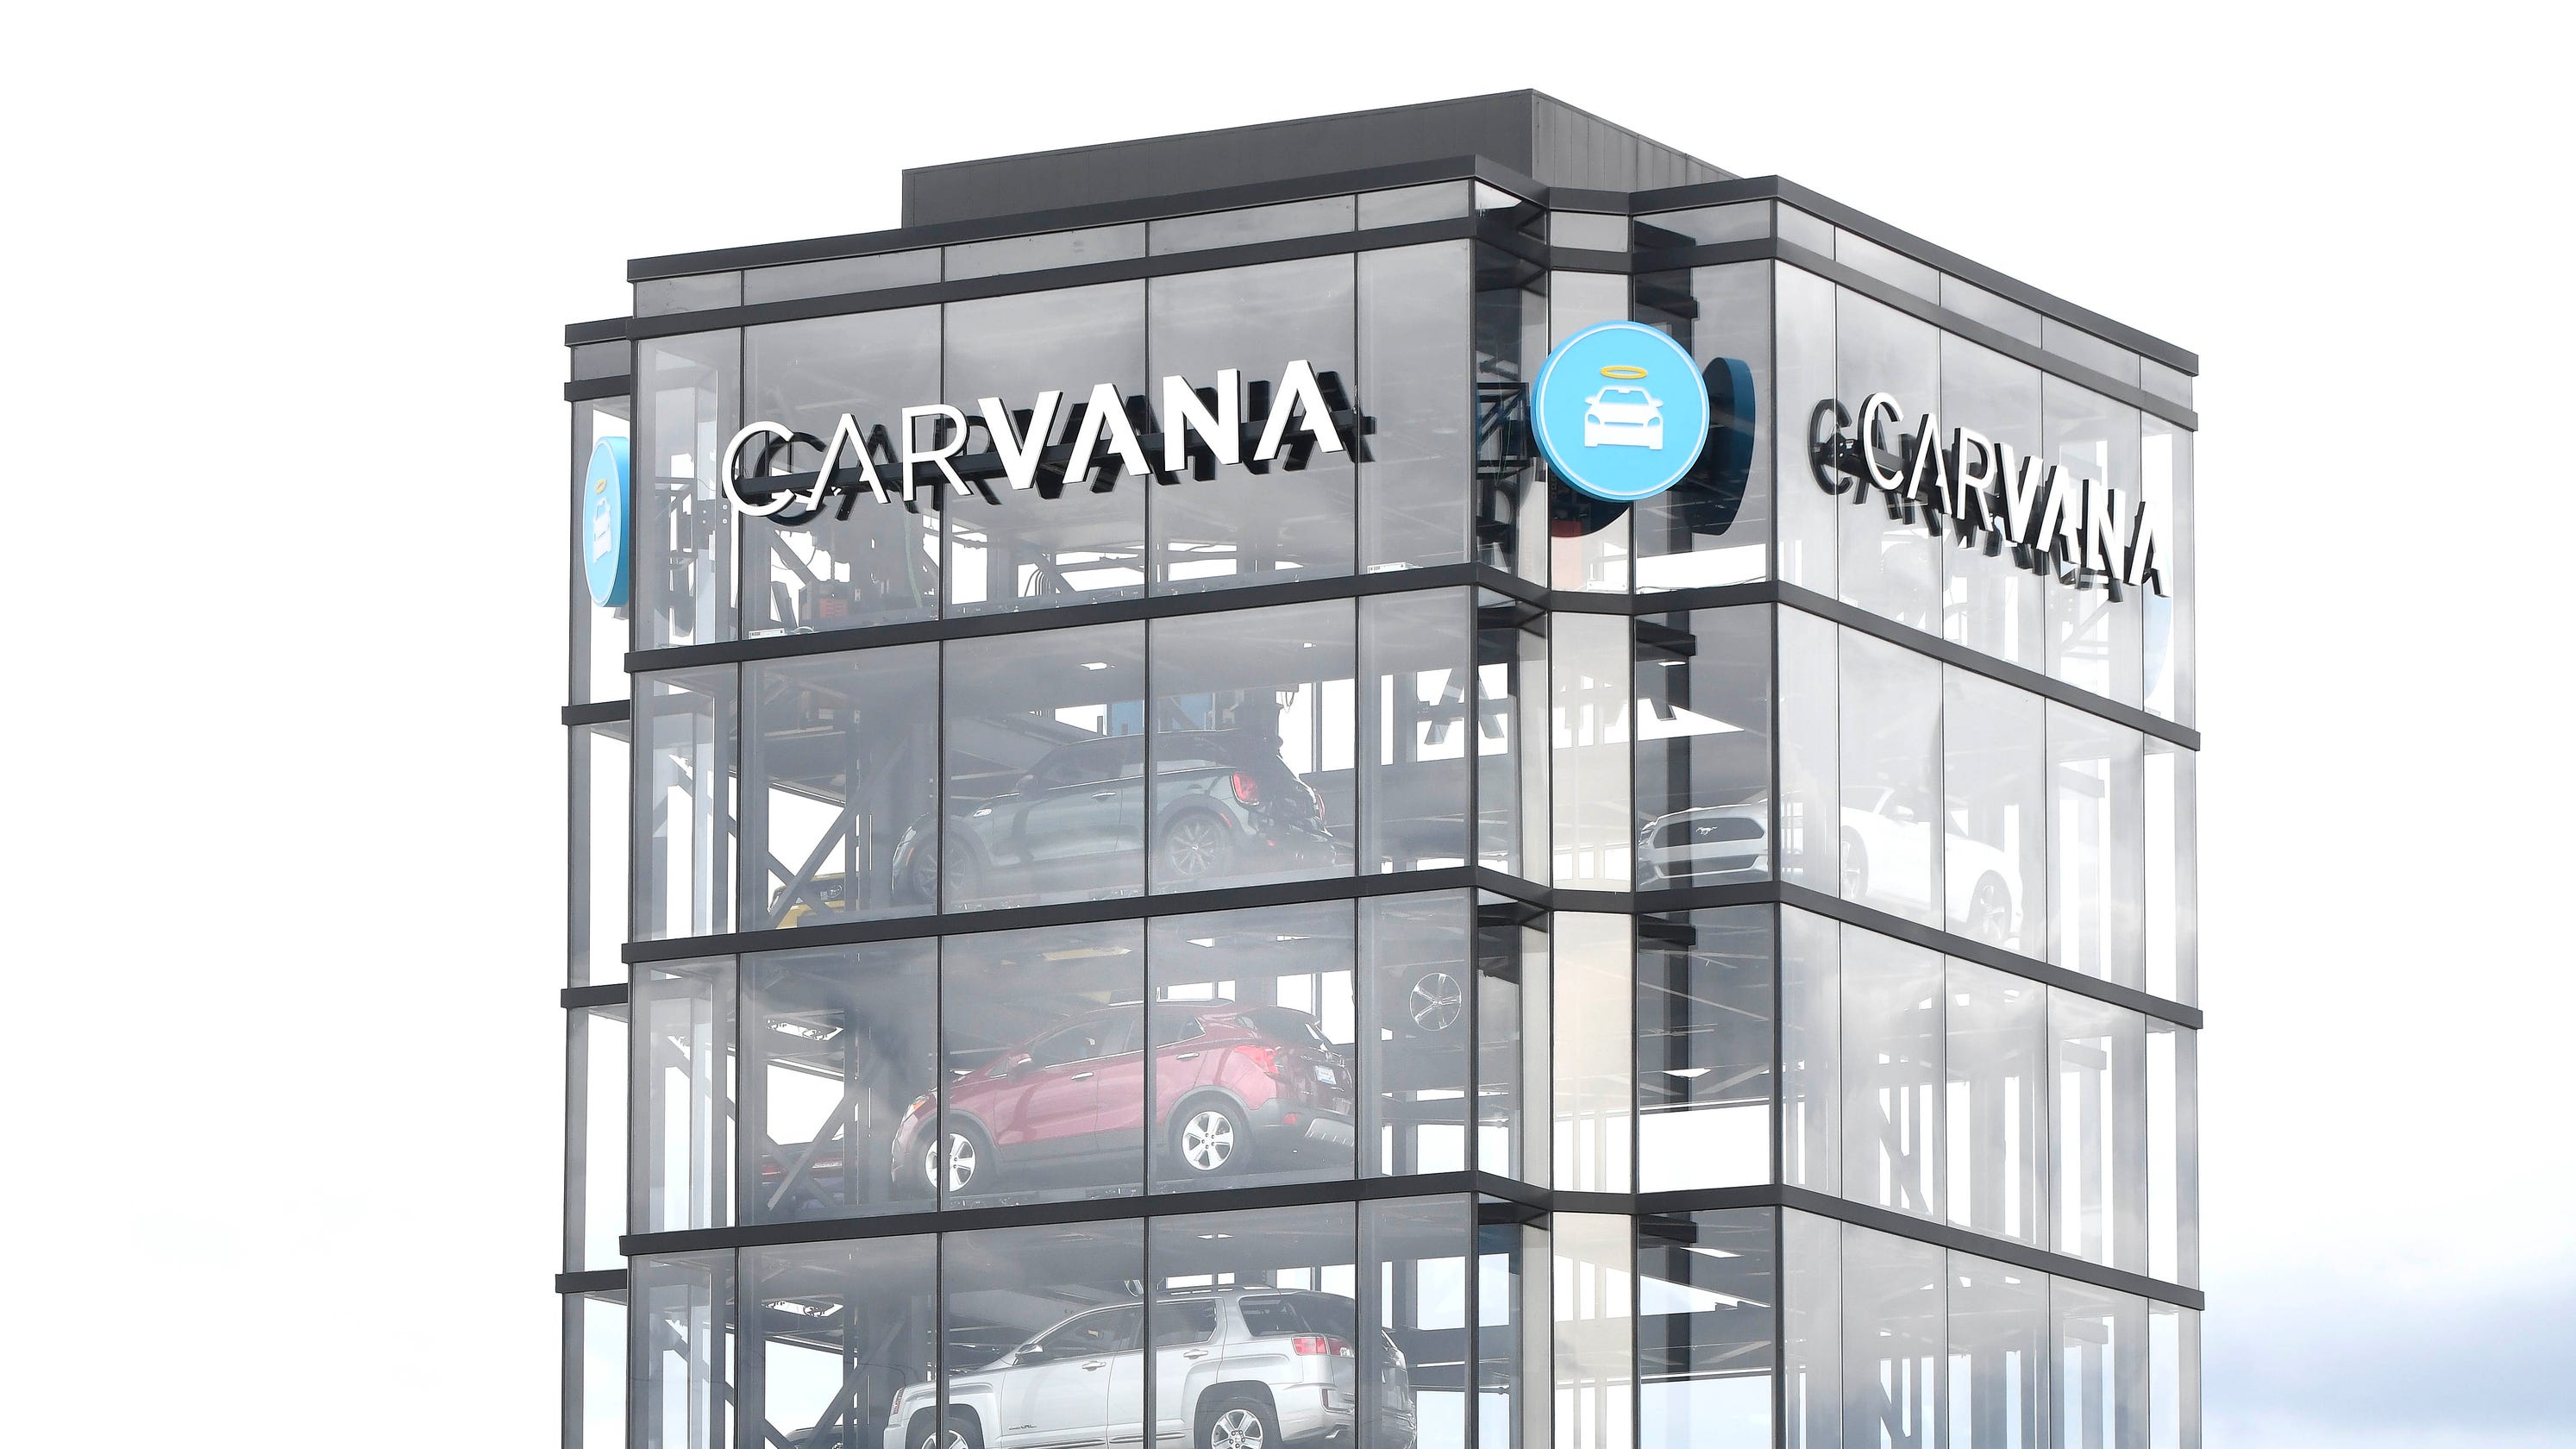 Online retailer Carvana debuts car vending machine in Novi